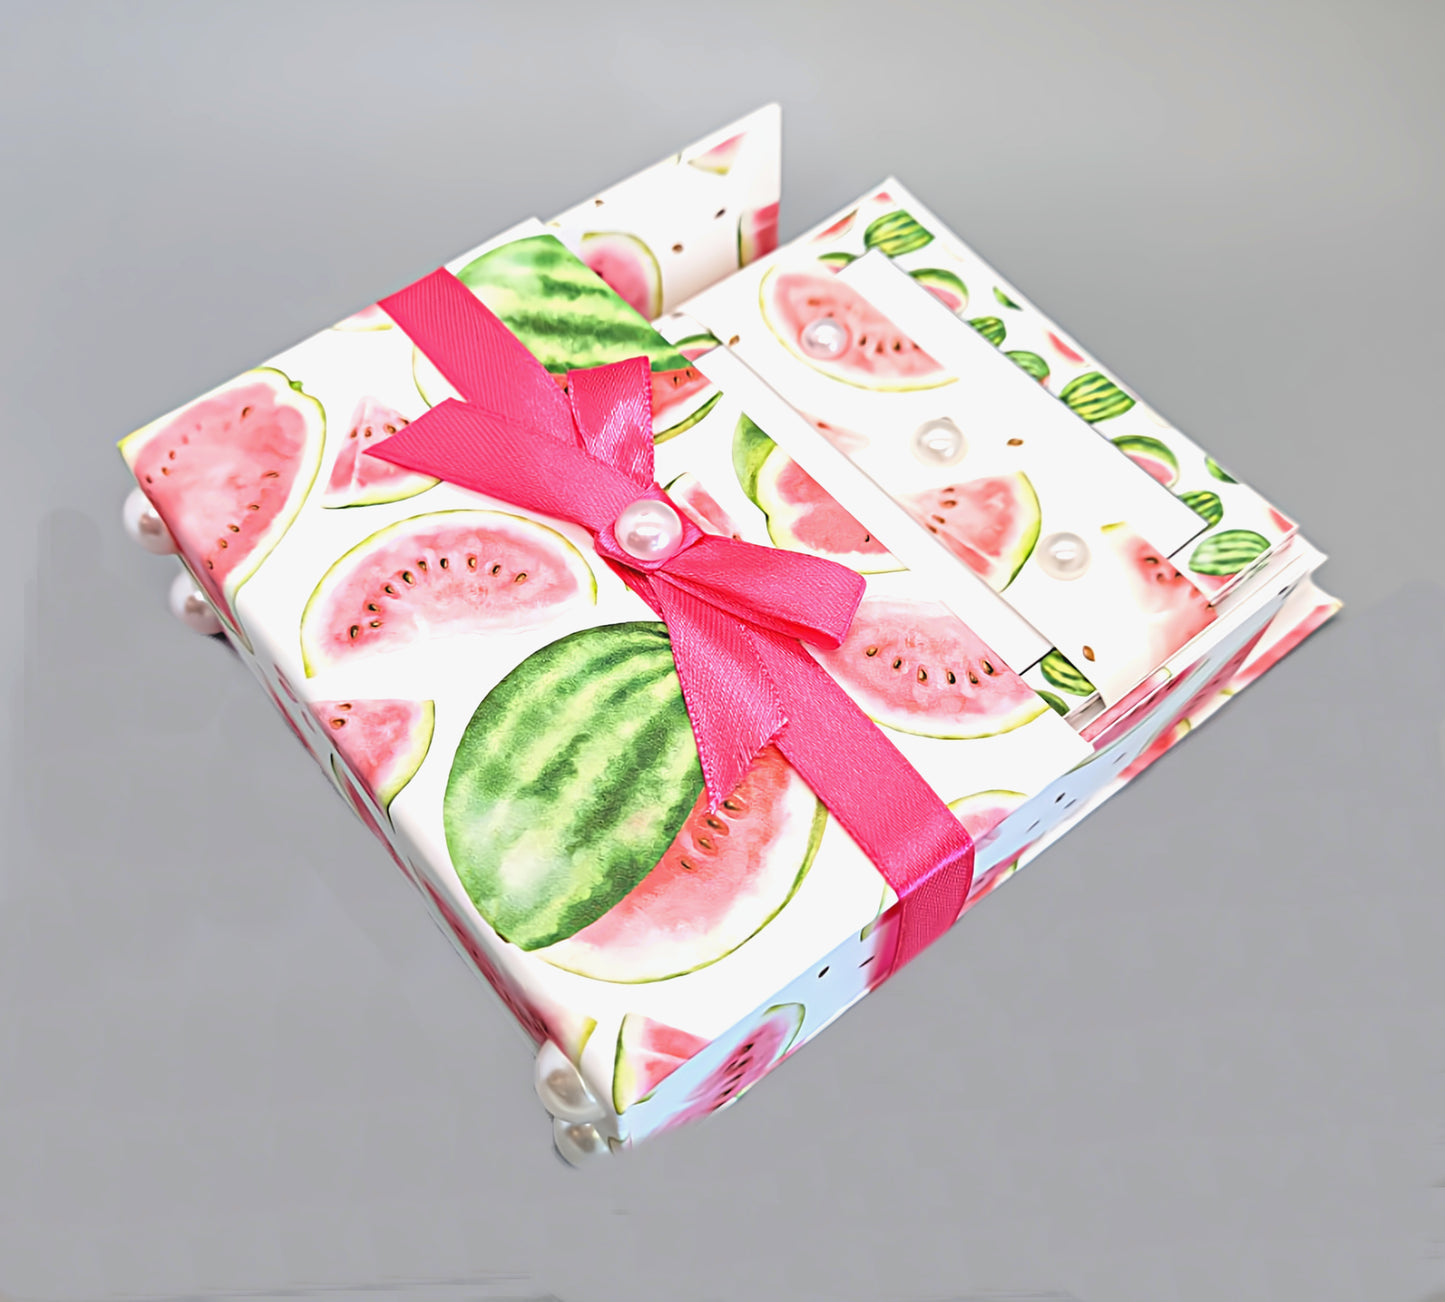 42-Pc Stationery Gift Box Set w/Reusable Desktop Organizer Box and Gold Pen - Fresh Red Watermelon - Chic Brico